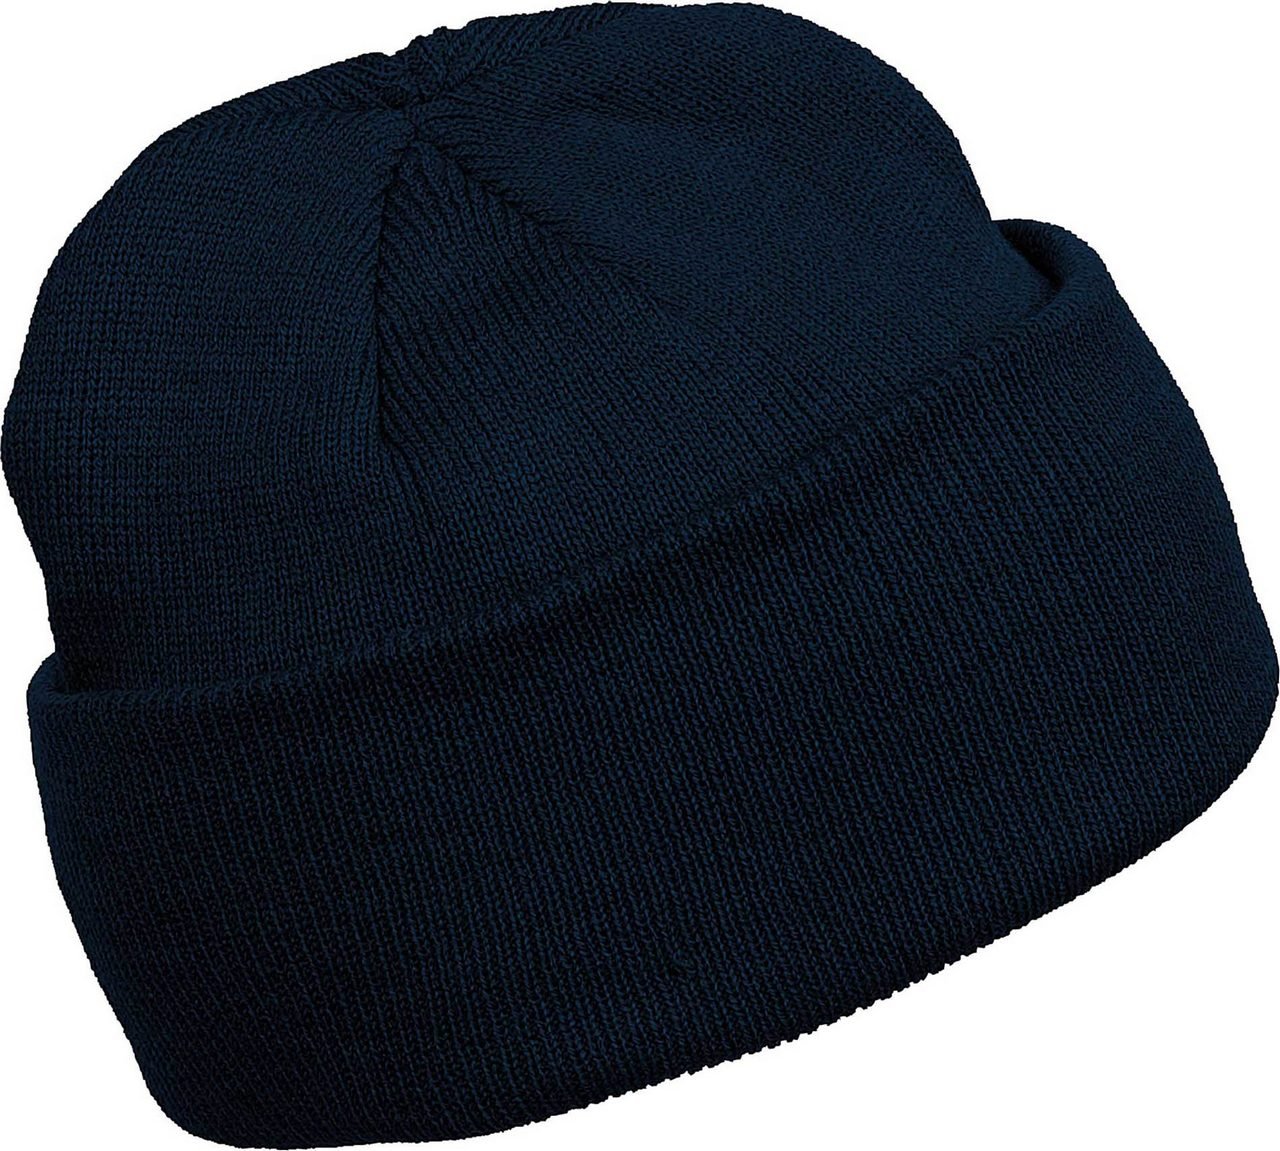  Caciula Knittedknitted-hat-3087.jpg